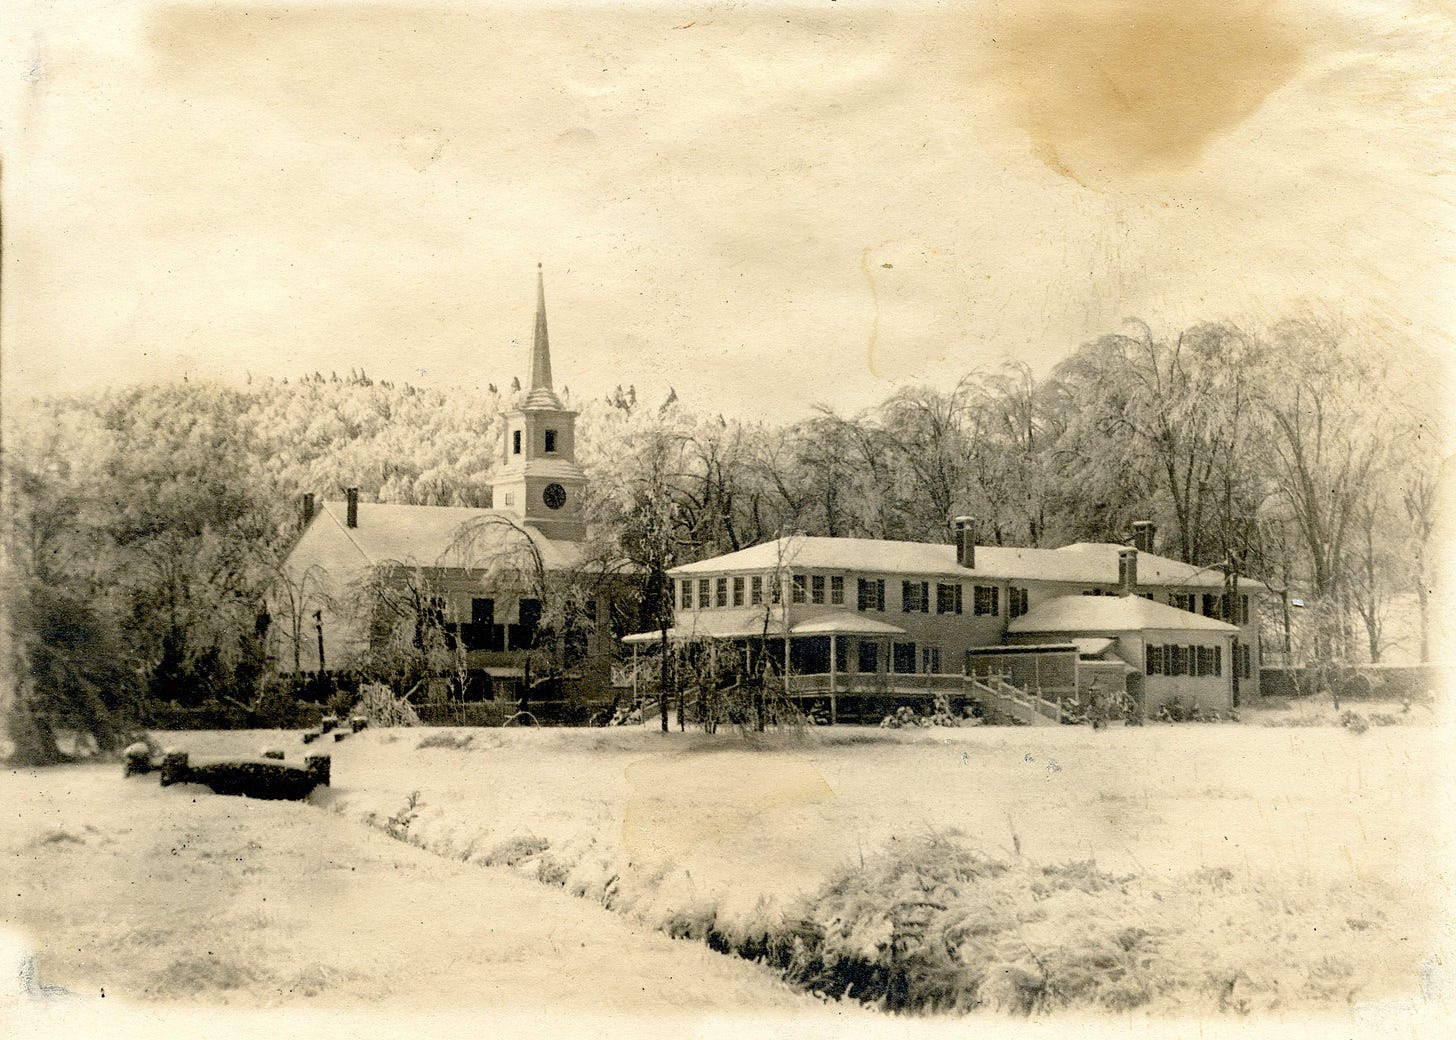 Homestead Inn and Church